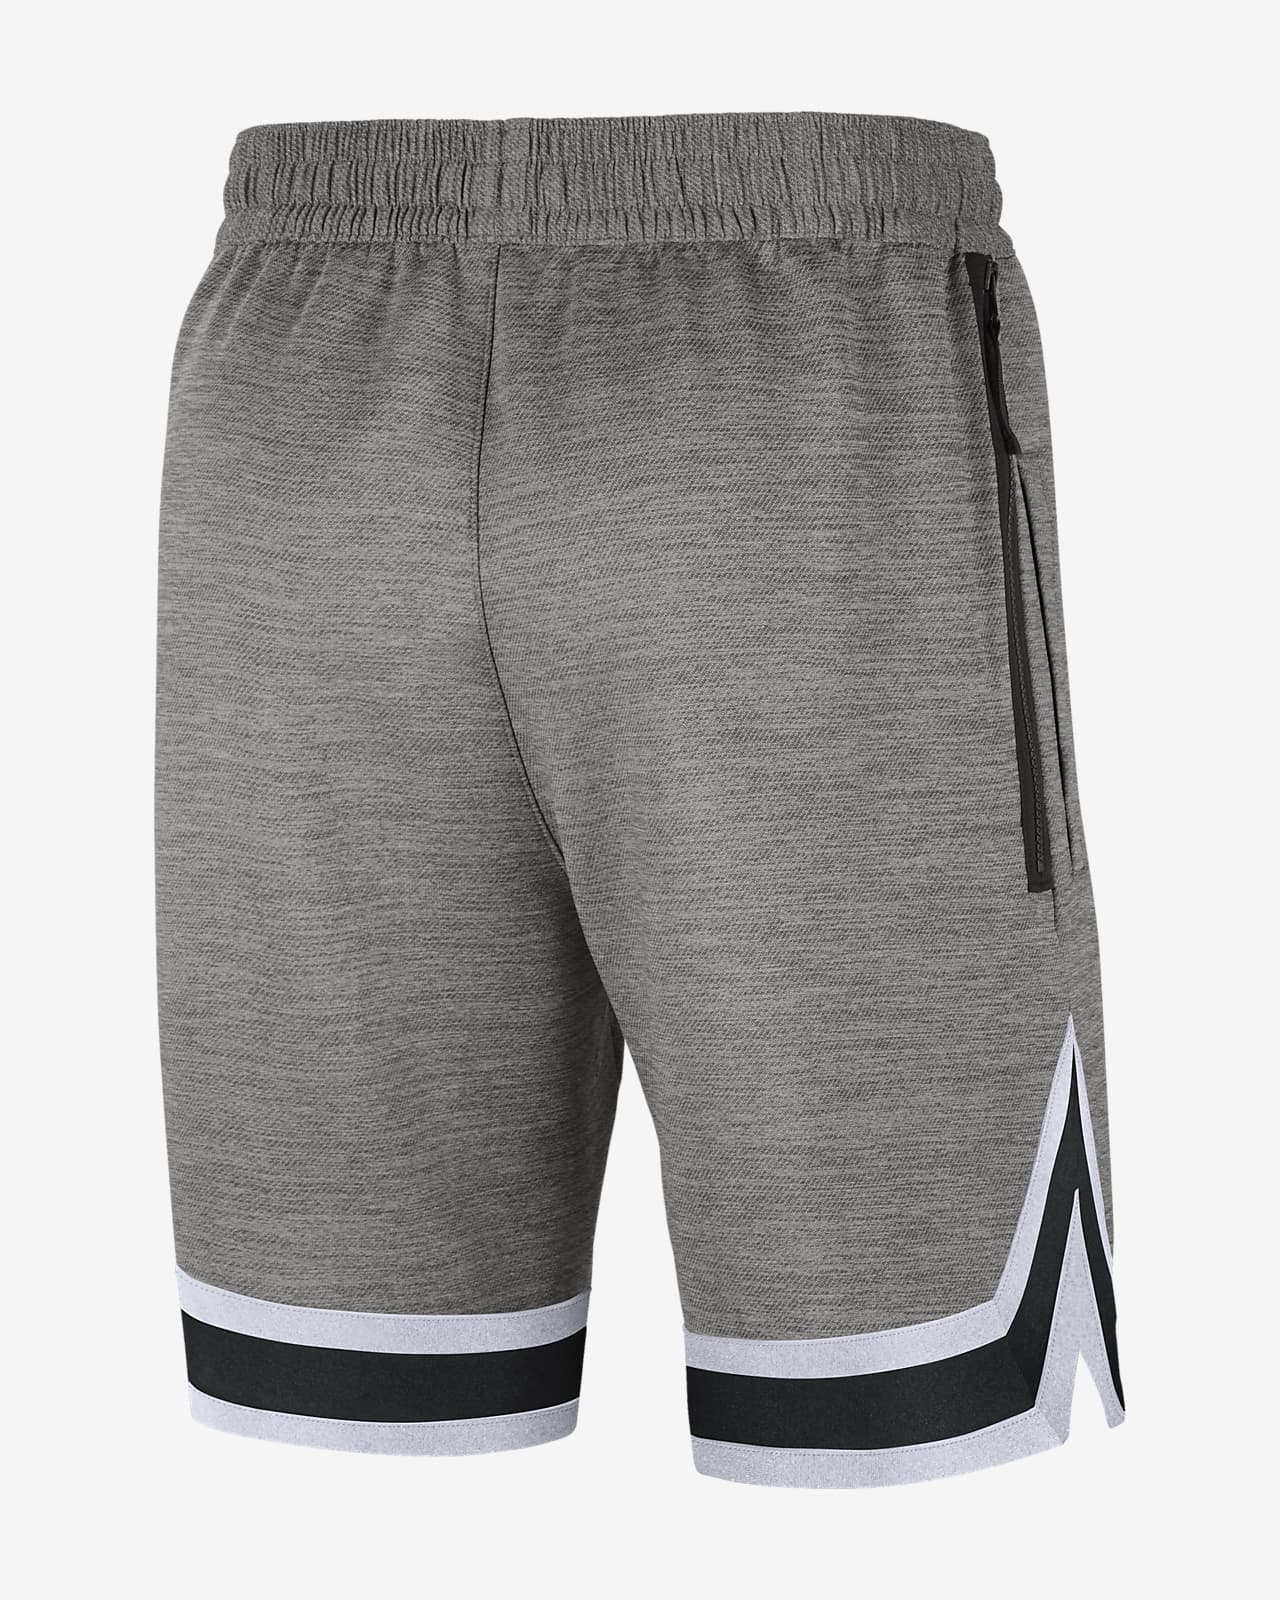 nike black and grey shorts